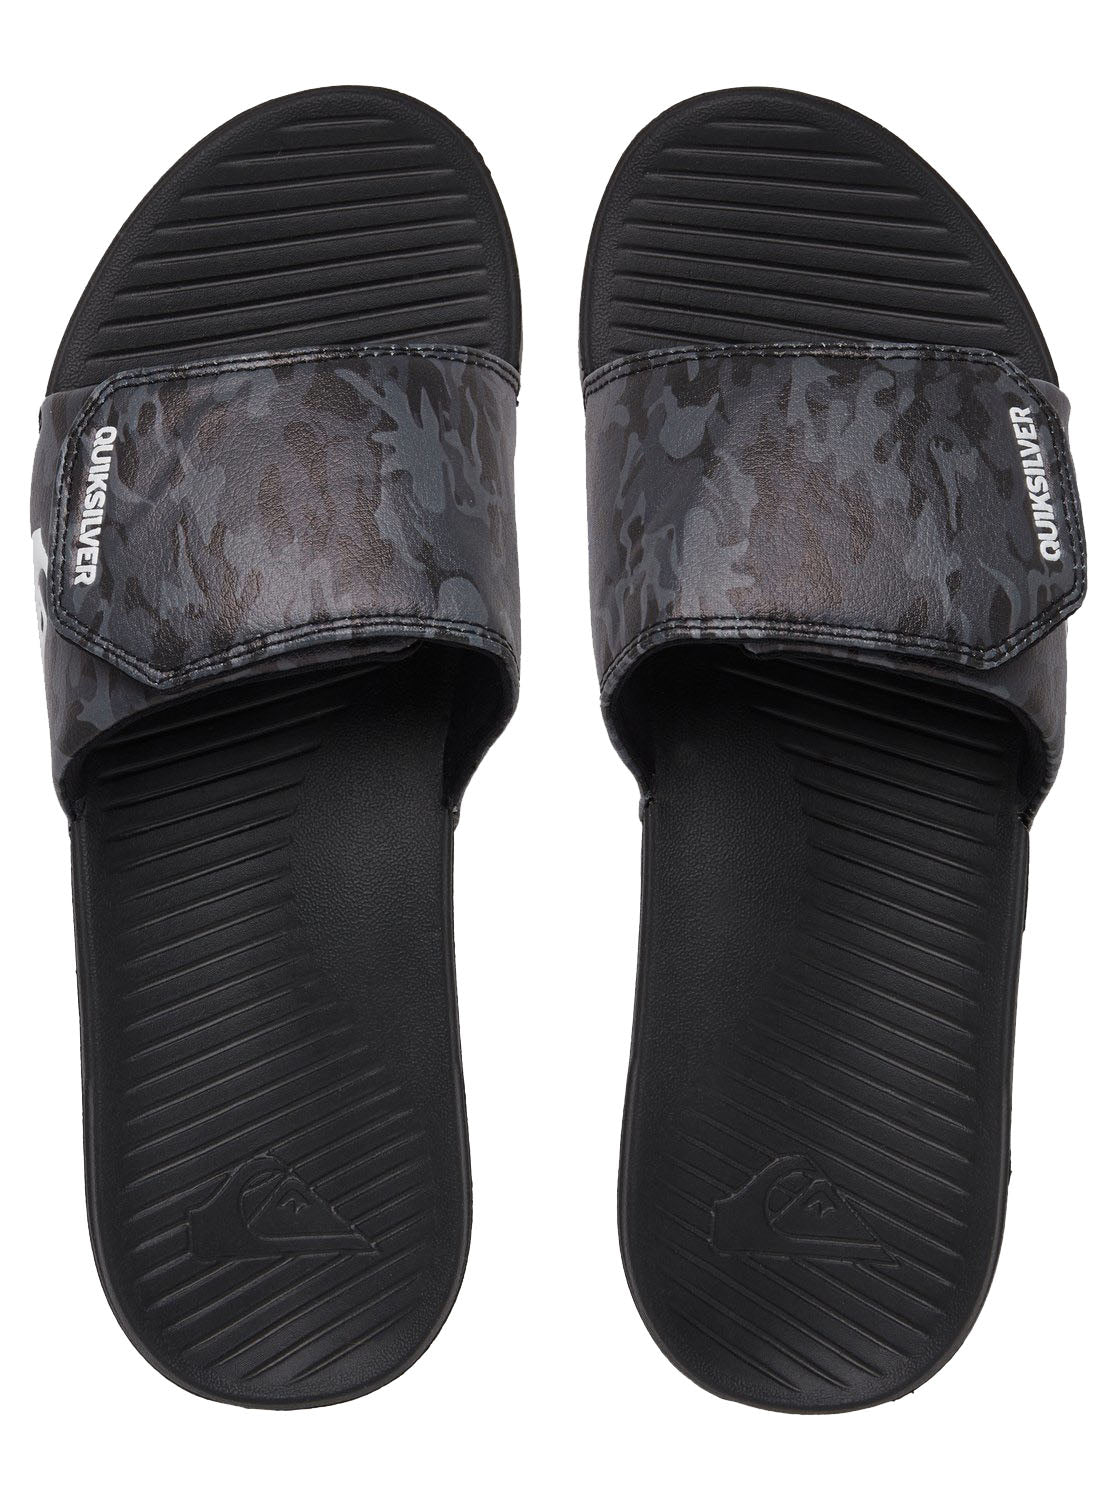 Quiksilver Bright Coast Adjust Mens Sandal XSKK-Grey-Black-Black 13